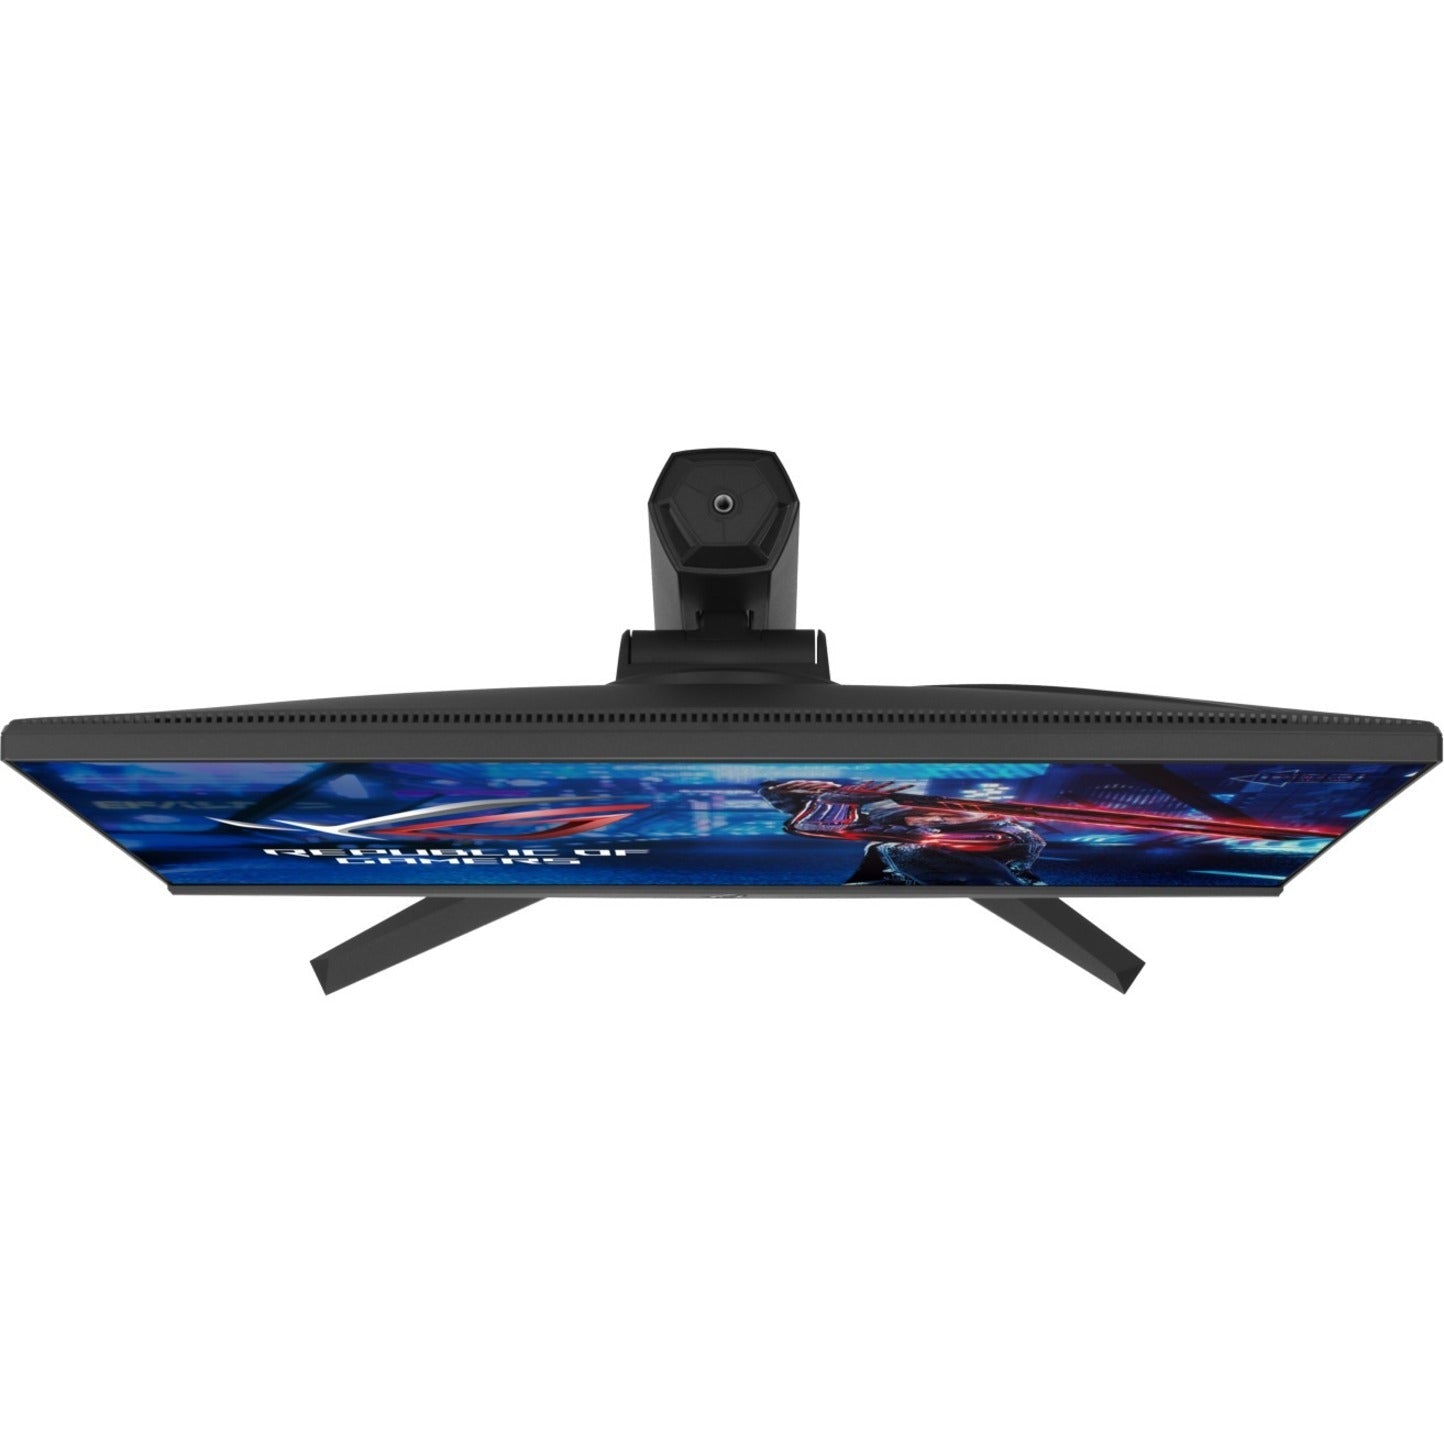 Asus ROG Strix XG256Q 24.5" Full HD Gaming LCD Monitor - 16:9